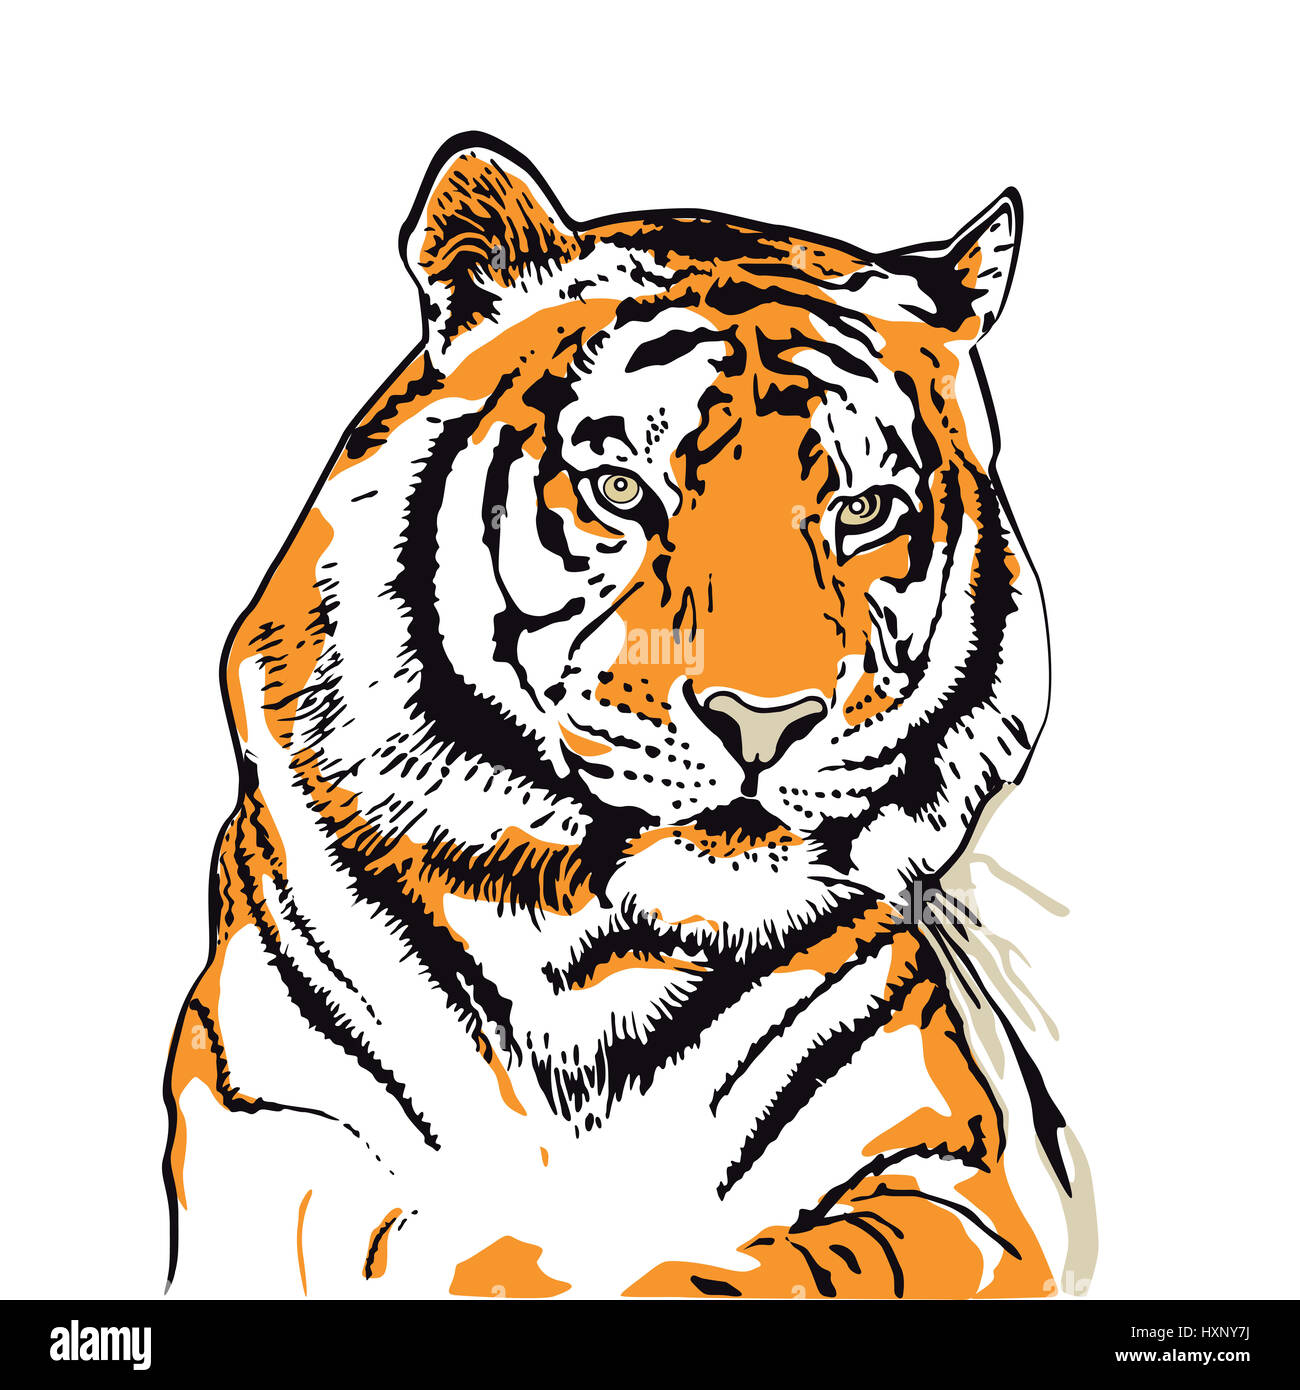 Tiger head illustration isolated on white Stock Photo